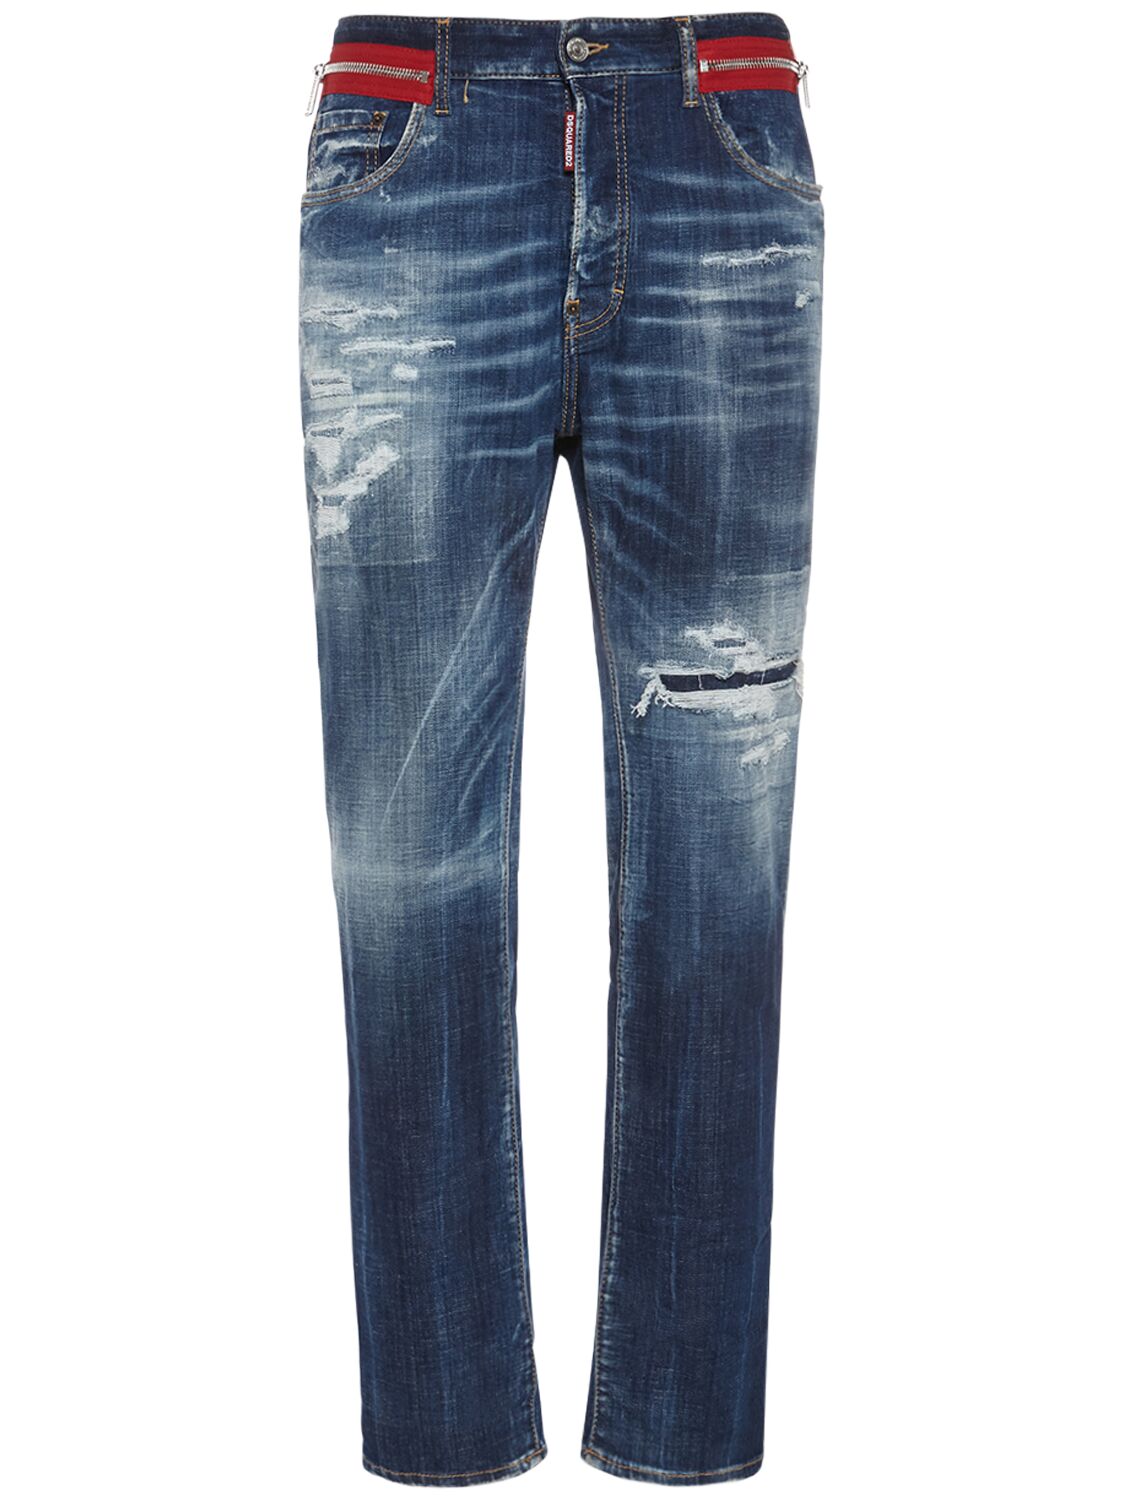 Image of 642 Fit Zipped Cotton Denim Jeans